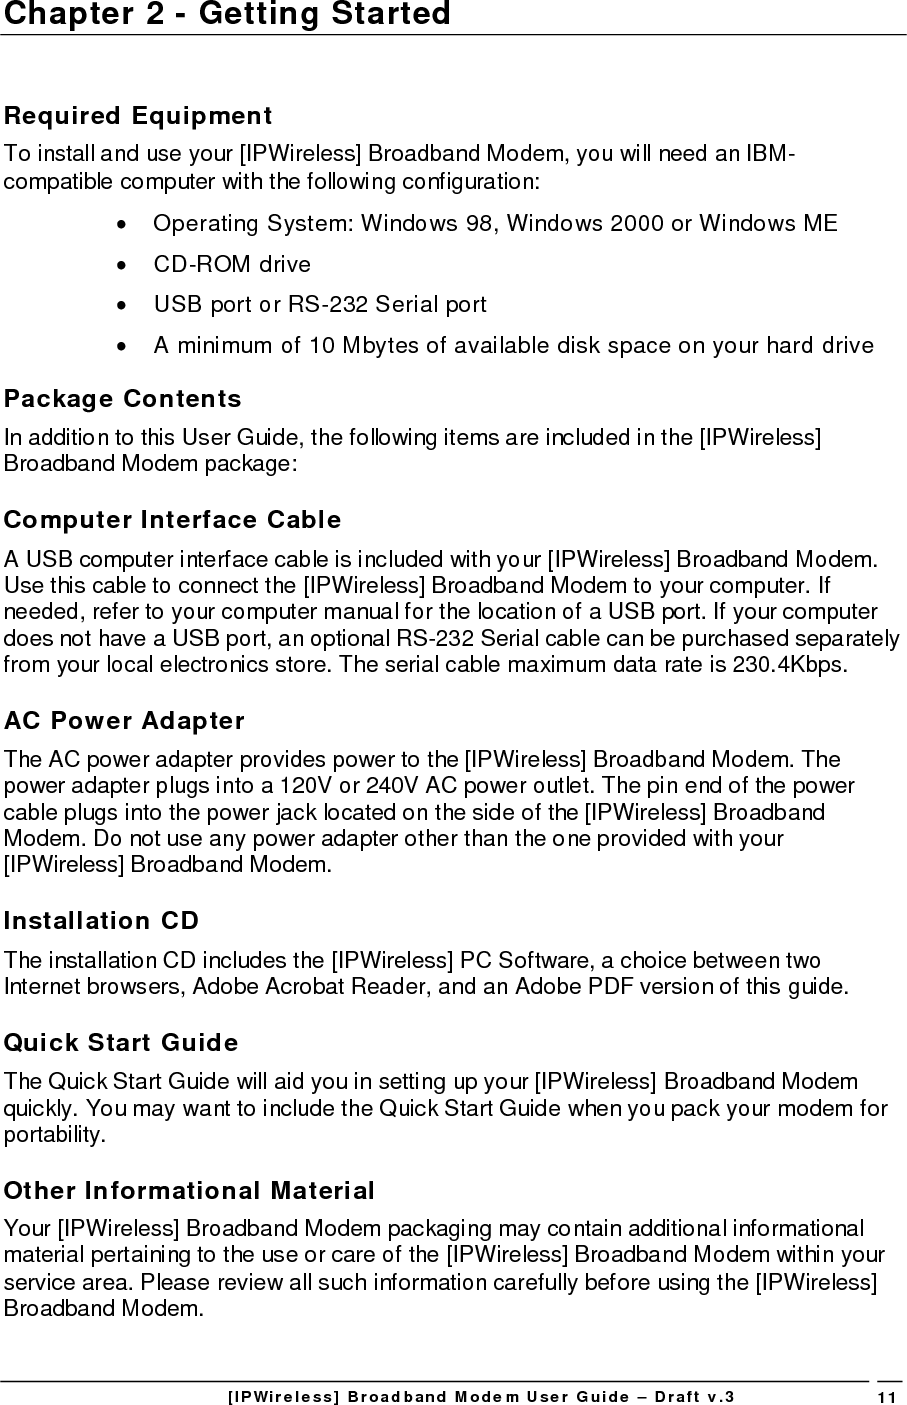 [IPWireless] Broadband Modem User Guide – Draft v.3 12